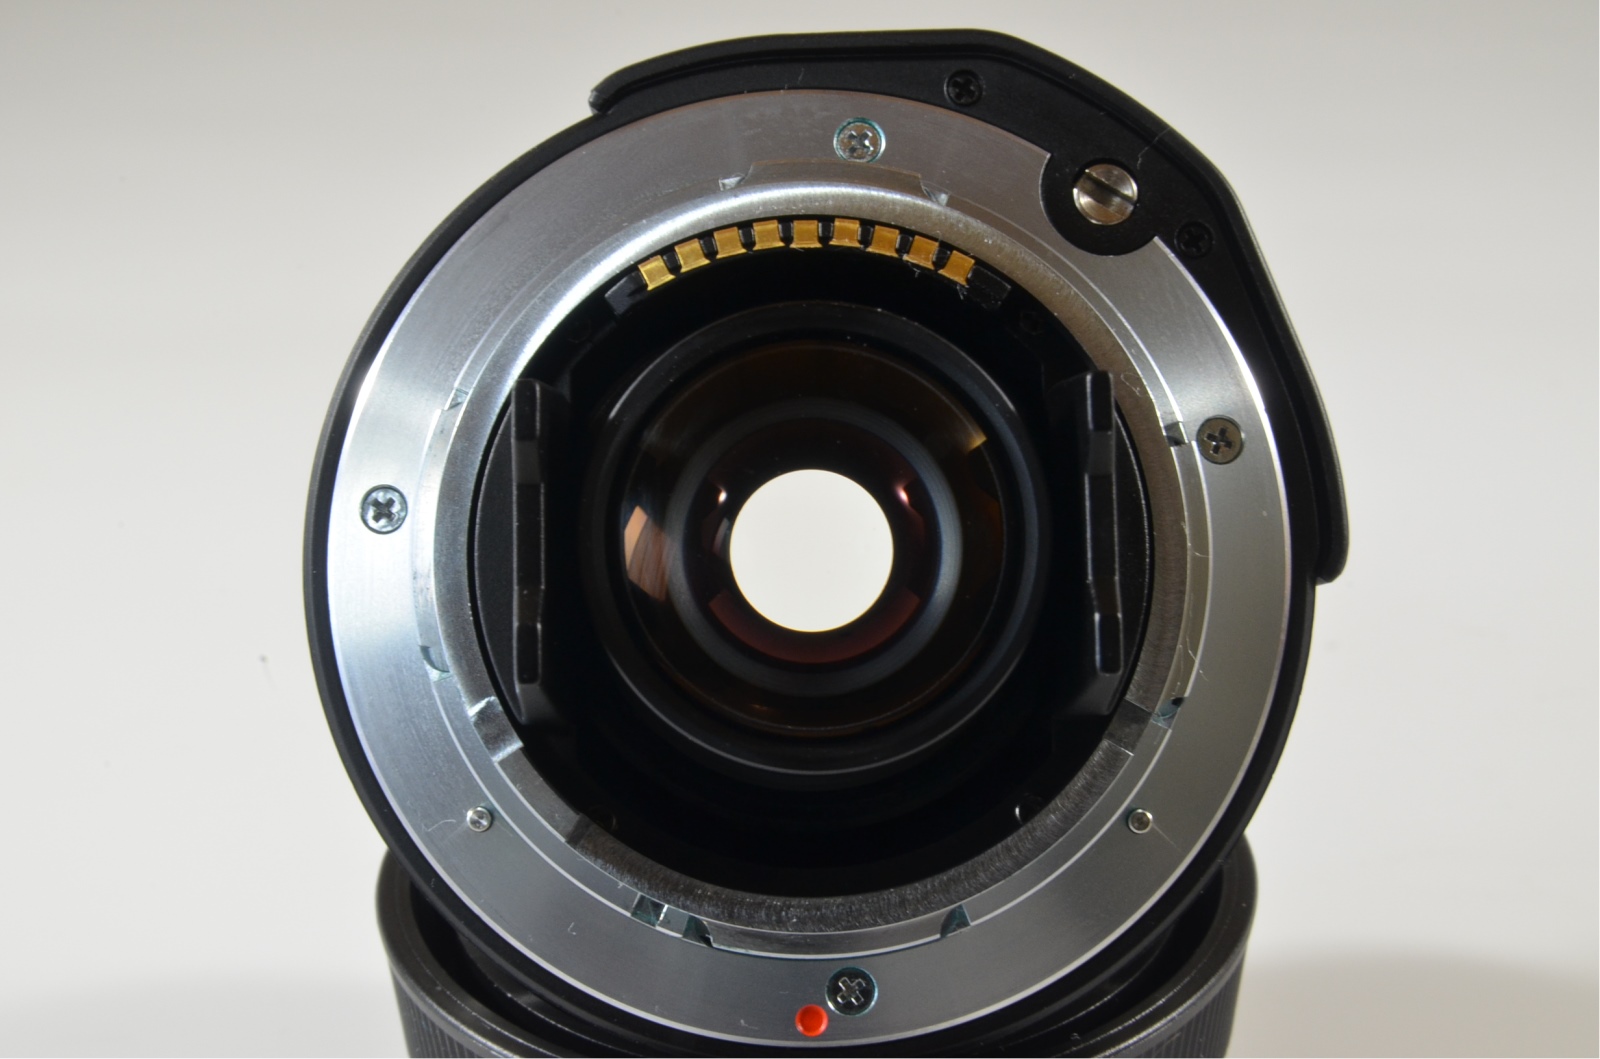 Contax Carl Zeiss T* Biogon 28mm f2.8 G Lens #a0032 | SuperB JAPAN CAMERA